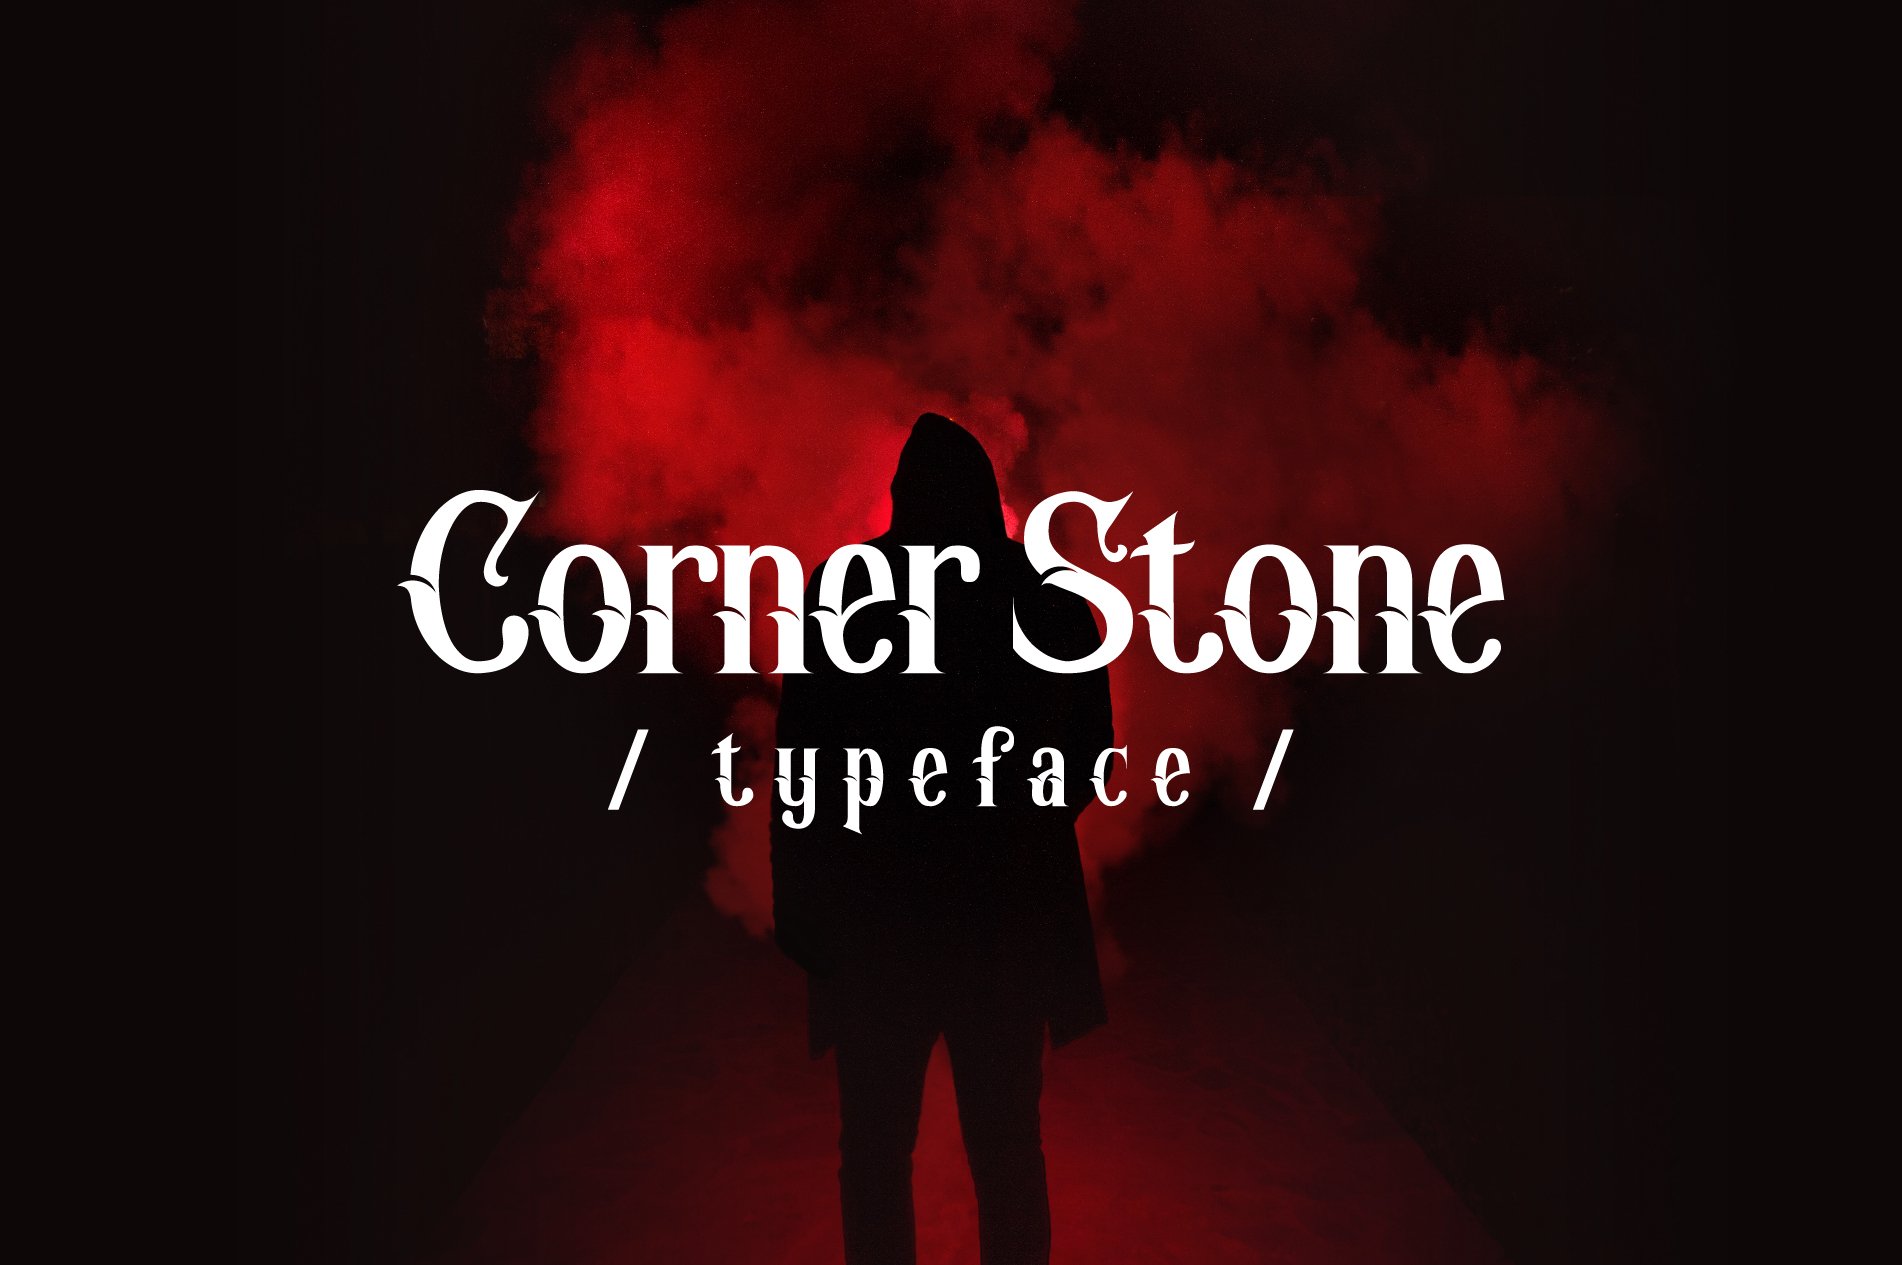 Corner Stone cover image.